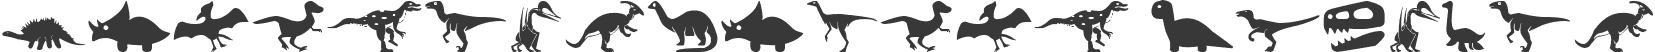 dinosaur-icons Regular